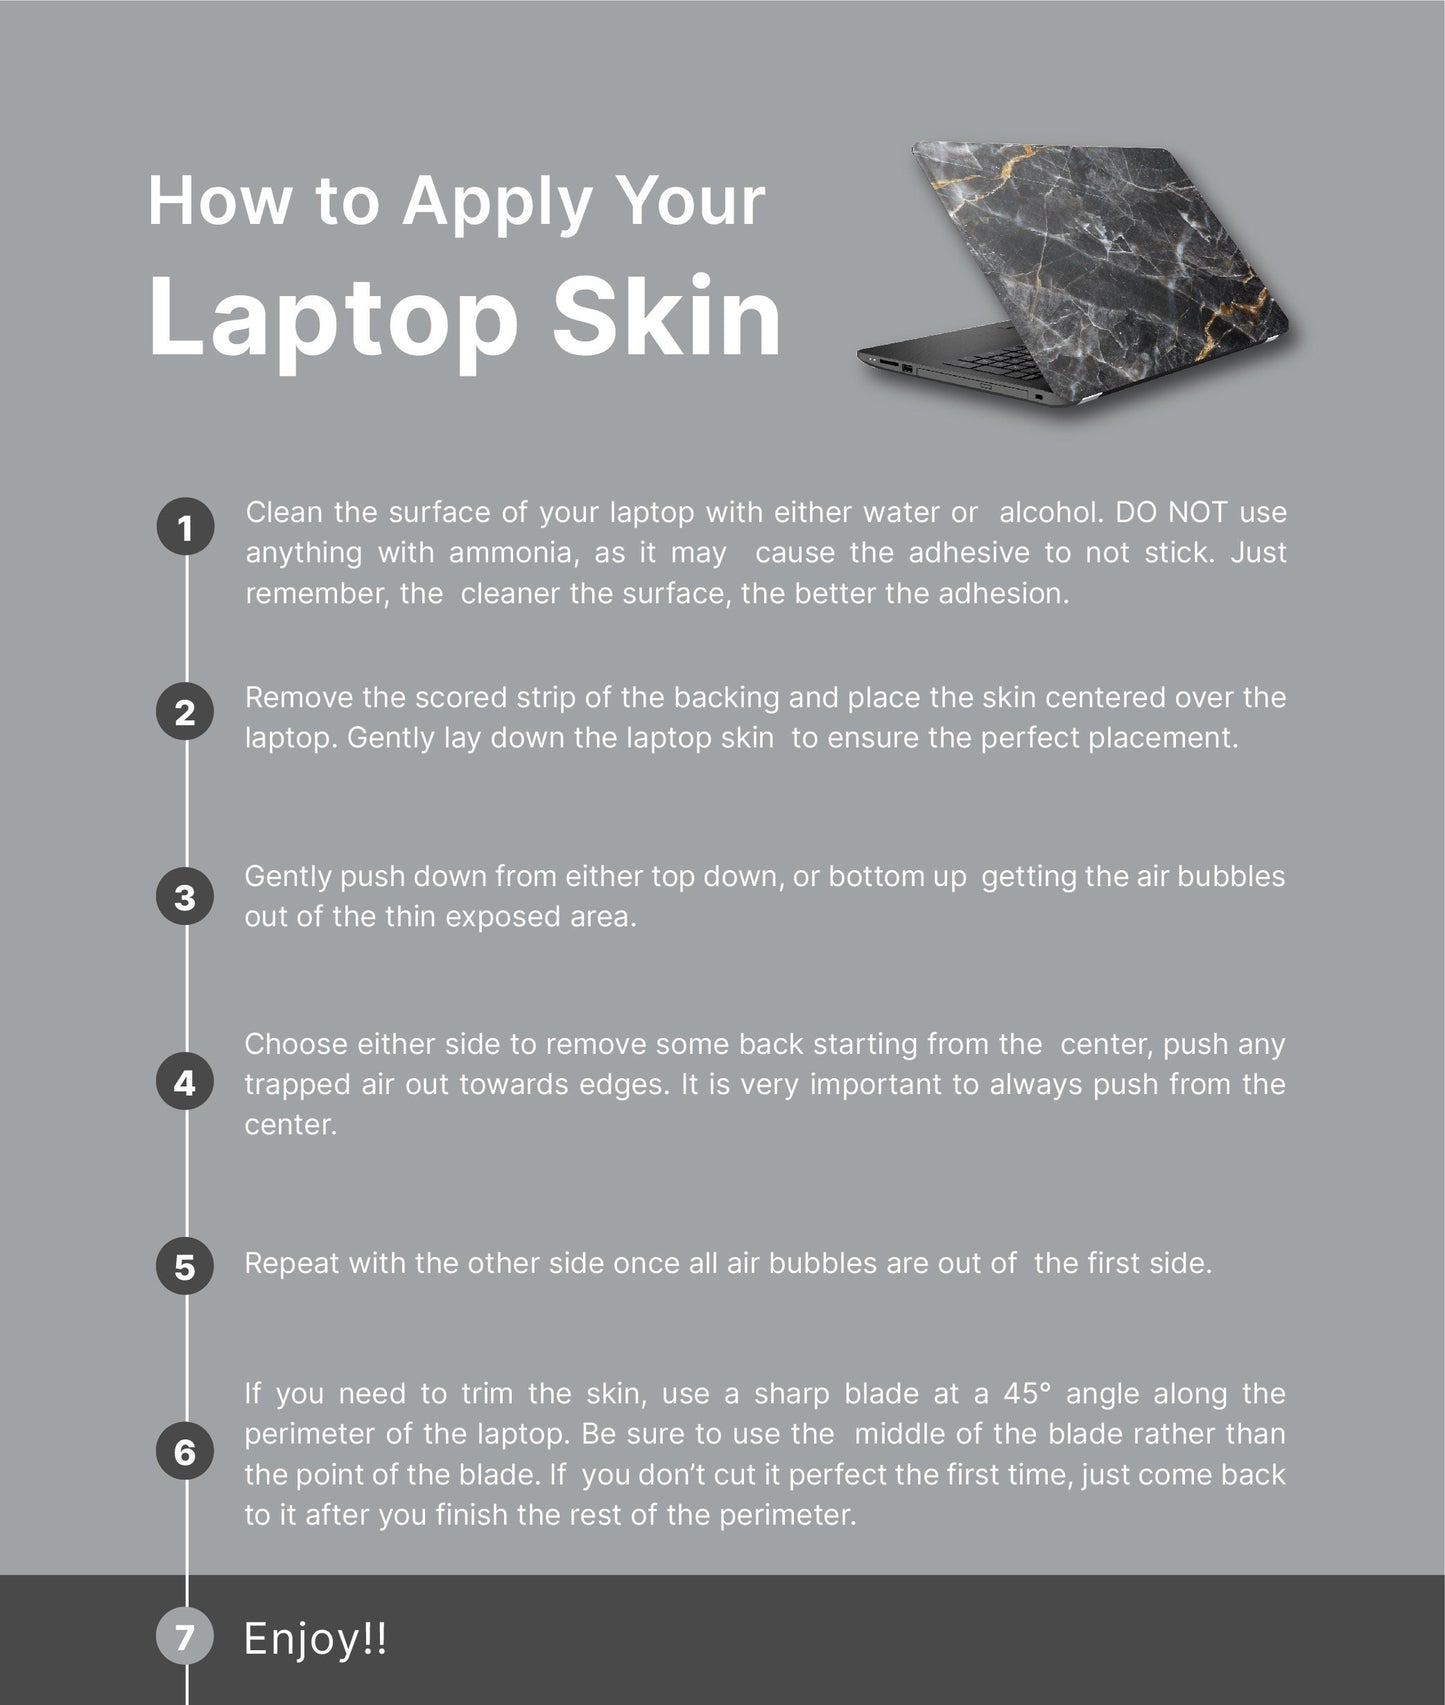 Boho Rainbow Laptop Skin, Laptop Cover, Laptop Skins, Removable Laptop Skins, Laptop Decal, Customized Laptop Skin, Laptop Stickers 104 - James & Inks